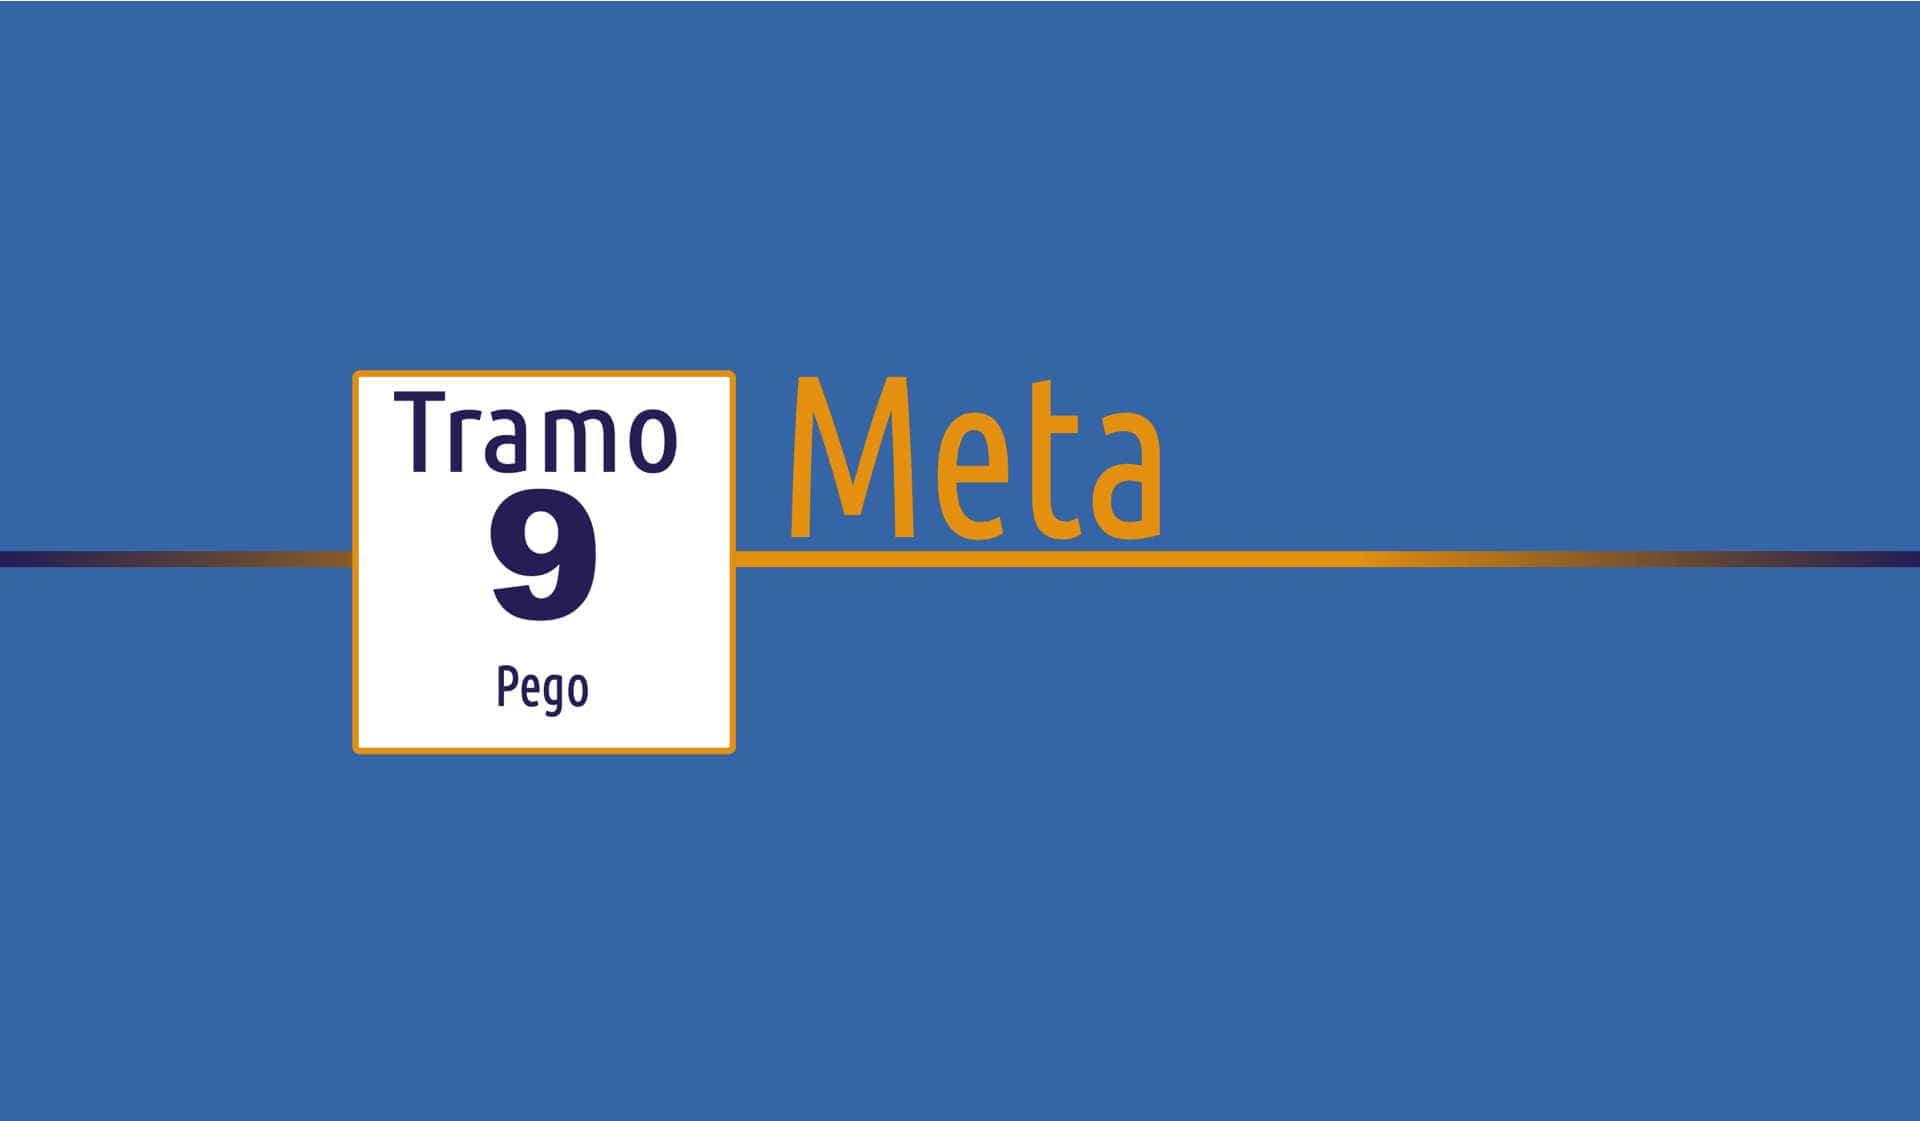 Tramo 9 › Pego  › Meta